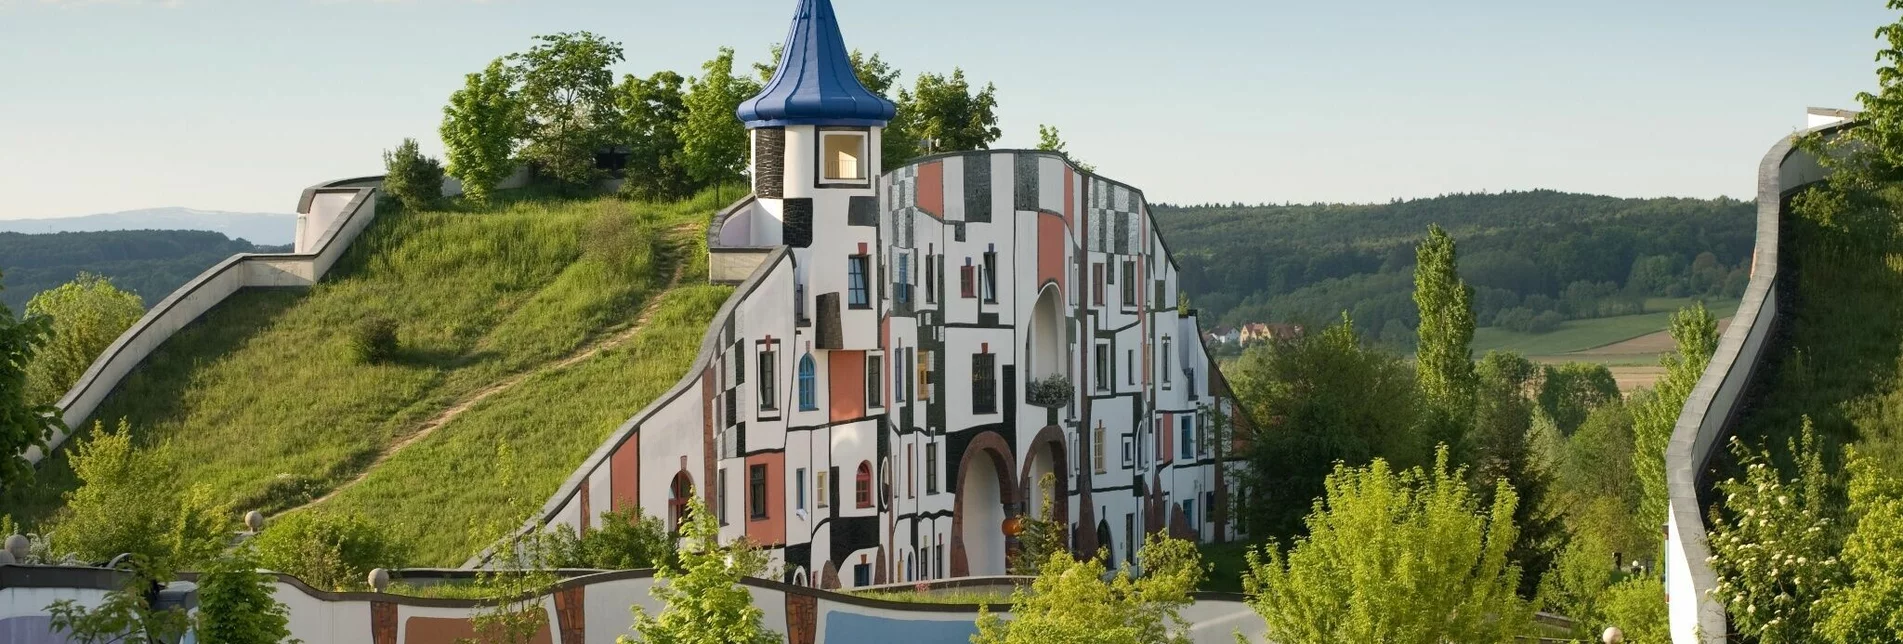 Wanderung Thermenrundweg Bad Blumau - Touren-Impression #1 | © Rogner Bad Blumau | © Hundertwasser Architekturprojekt